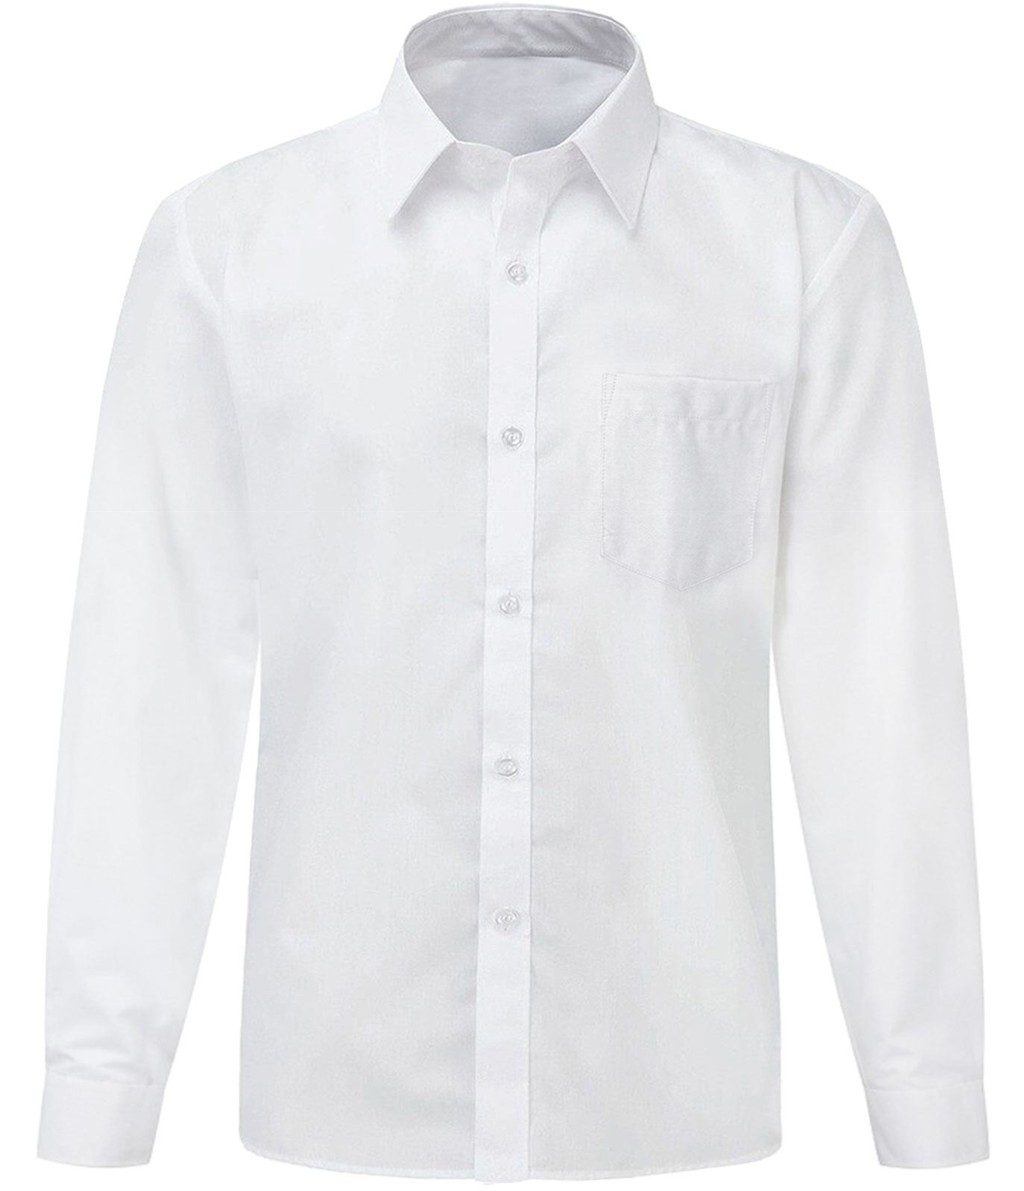 Girls Long Sleeve School Collar Shirt WHITE Back to School Uniform ...